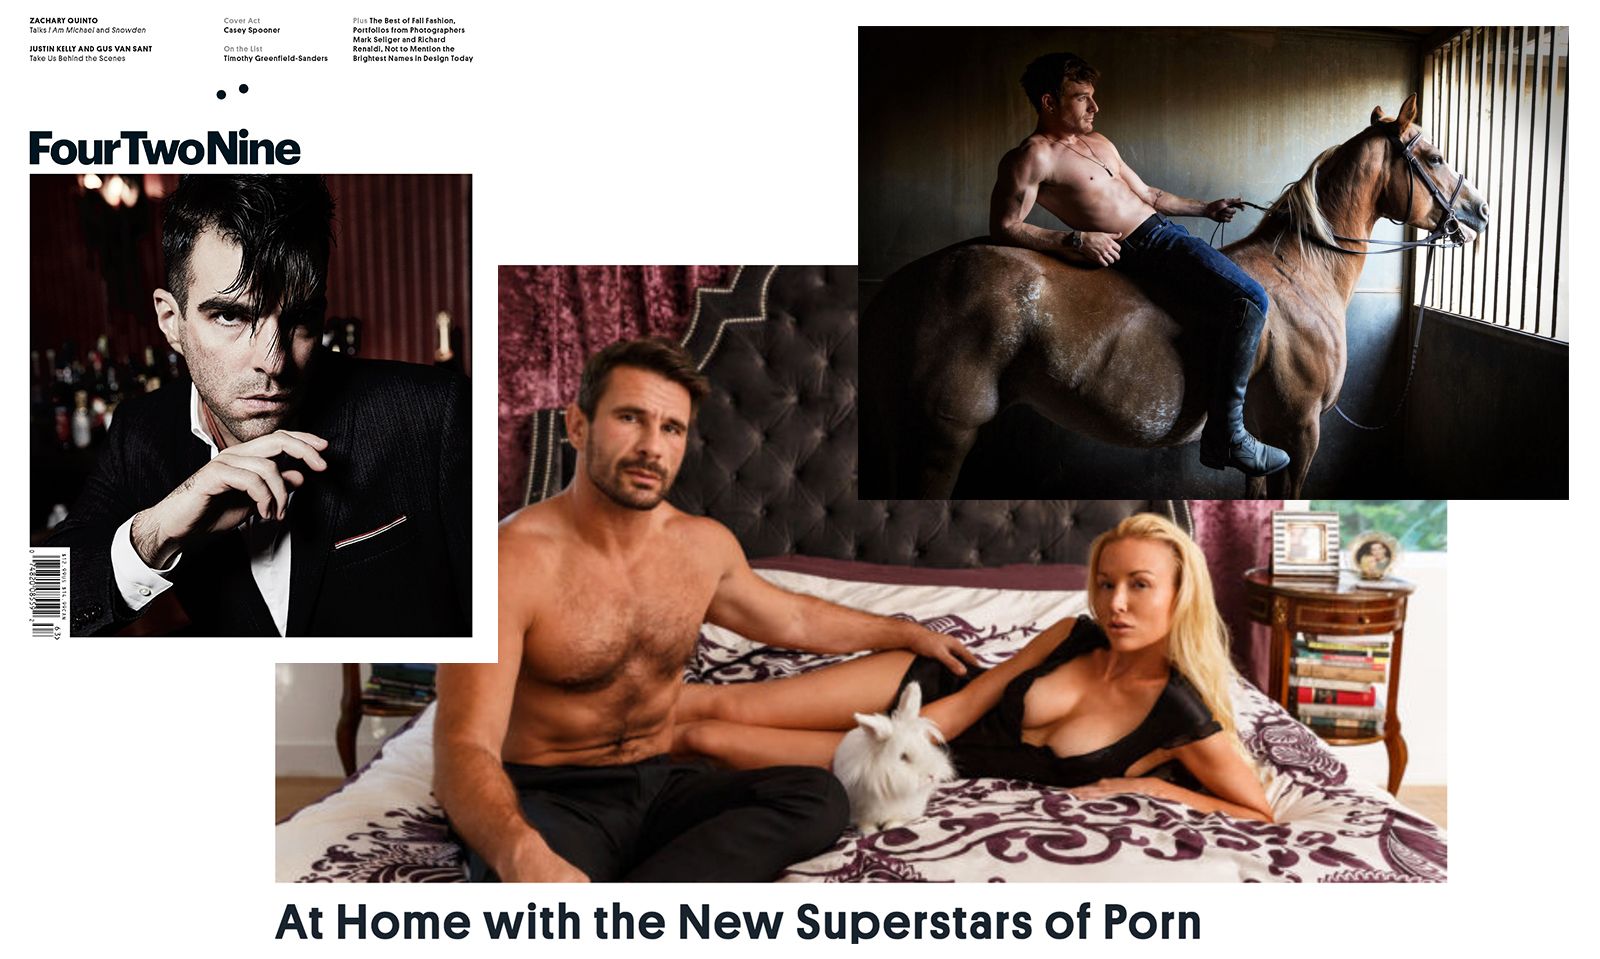 'FourTwoNine' Profiles Adult Stars in September Issue